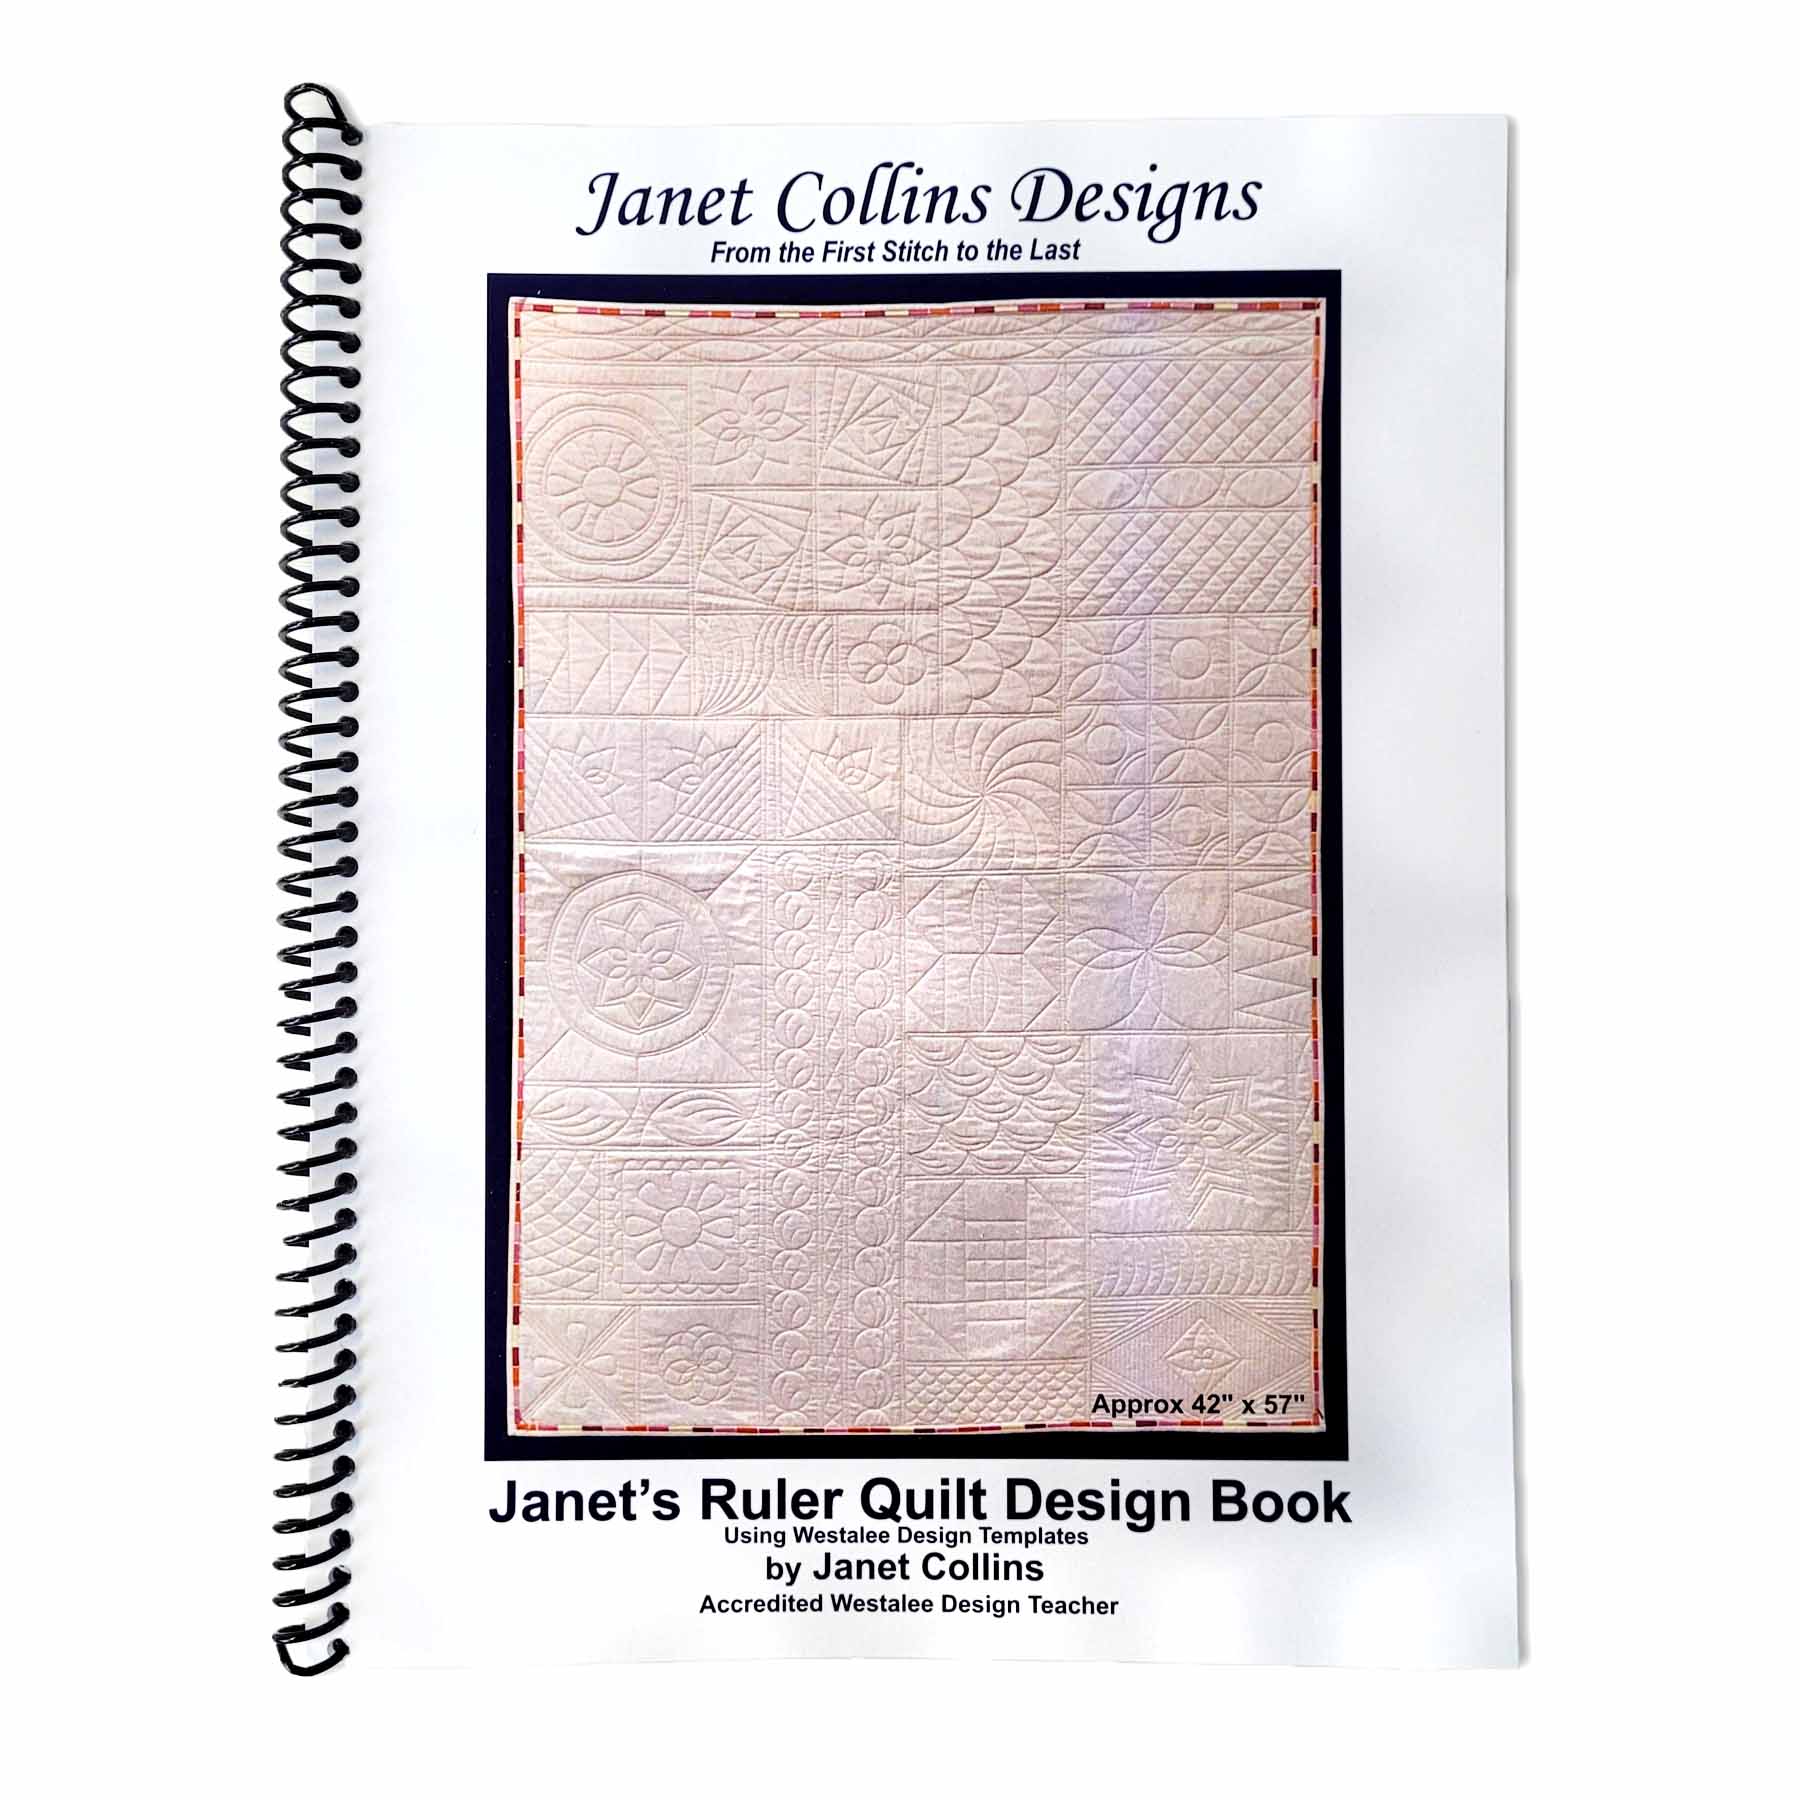 Janet's Ruler Quilt Design Book from Westalee